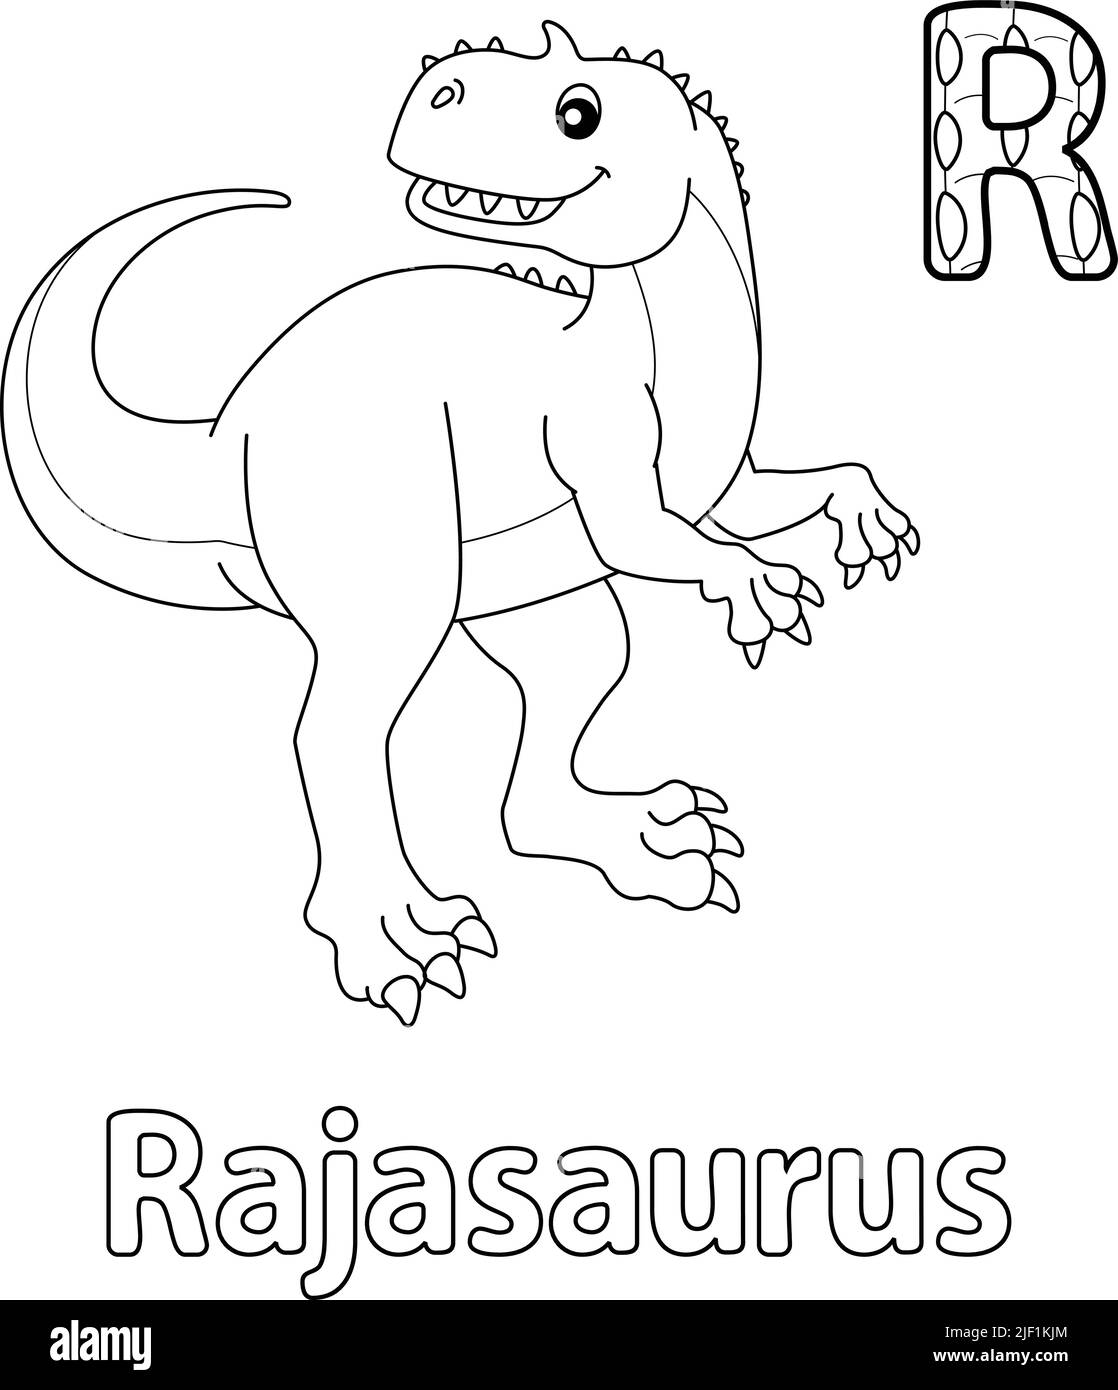 Rajasaurus Alphabet Dinosaur ABC Coloring Page R Stock Vector Image ...